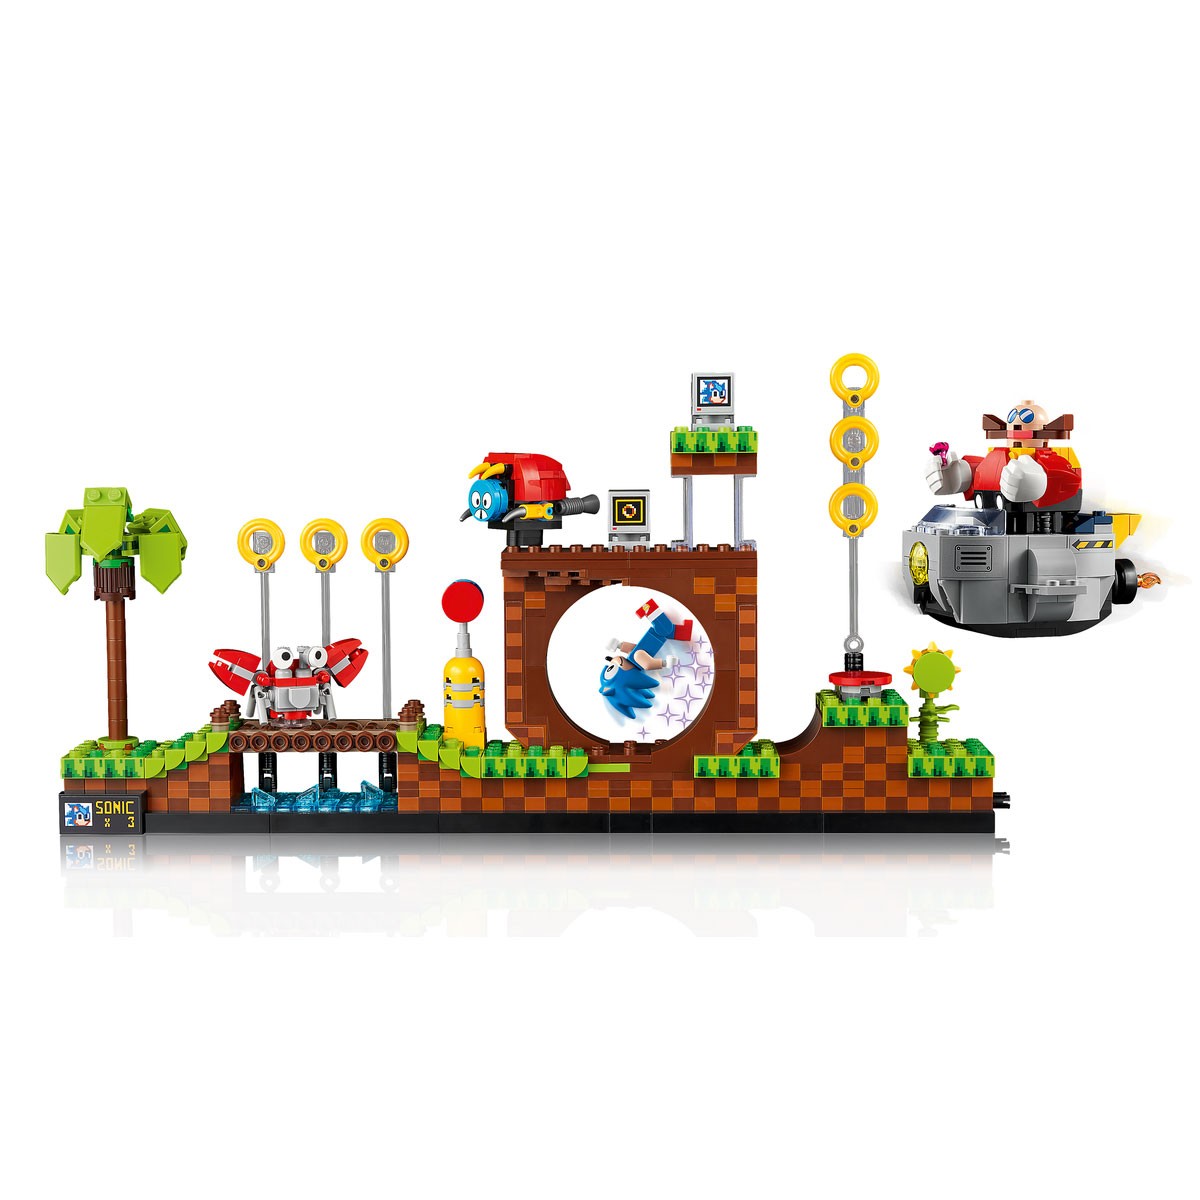 LEGO Sonic Green Hill Zone (21331)